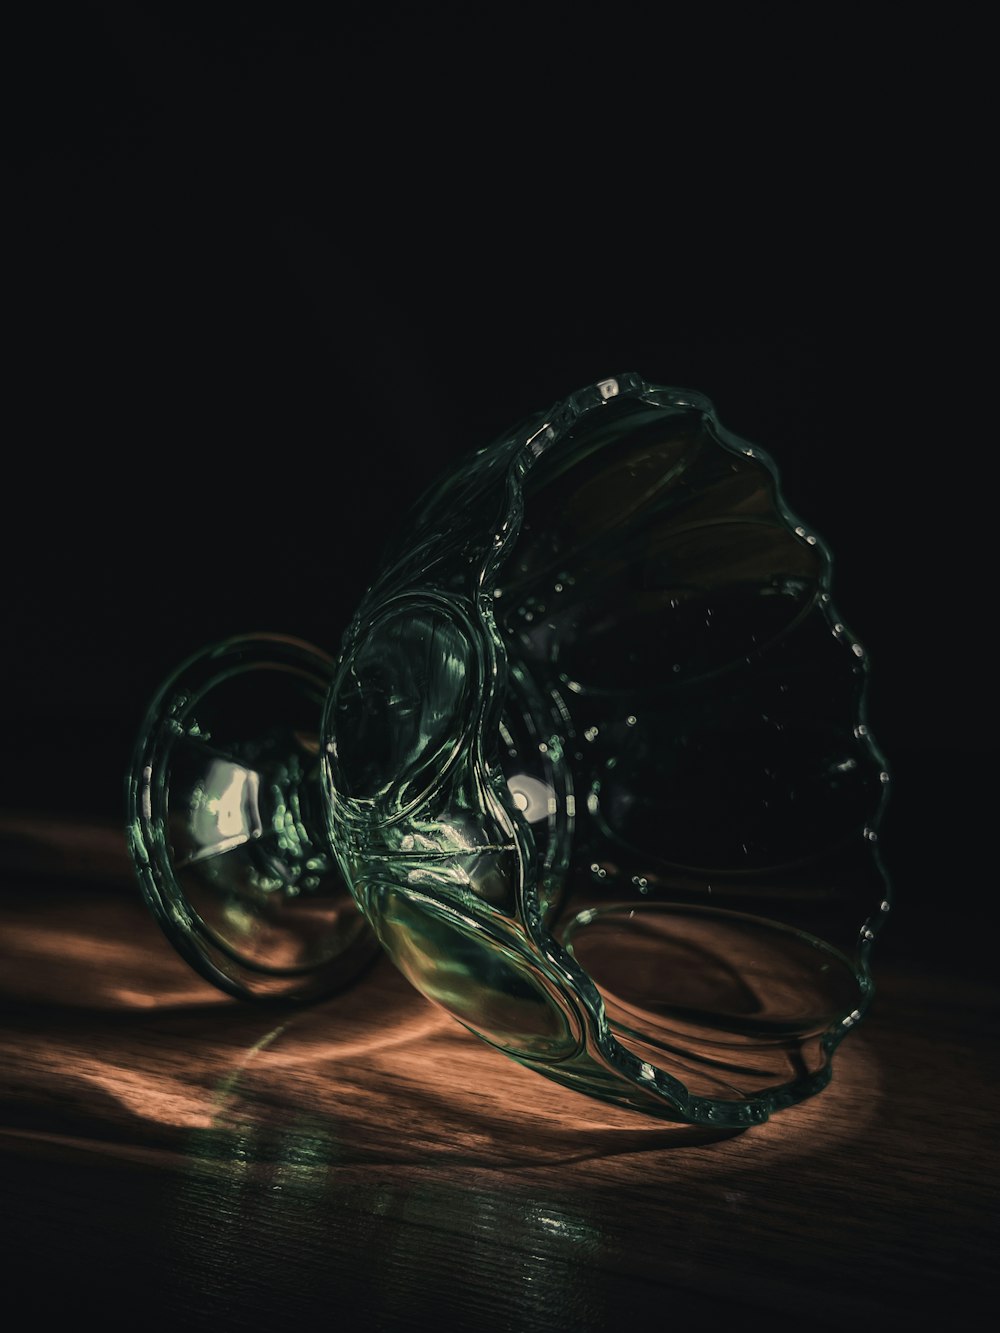 a pair of glass orbs